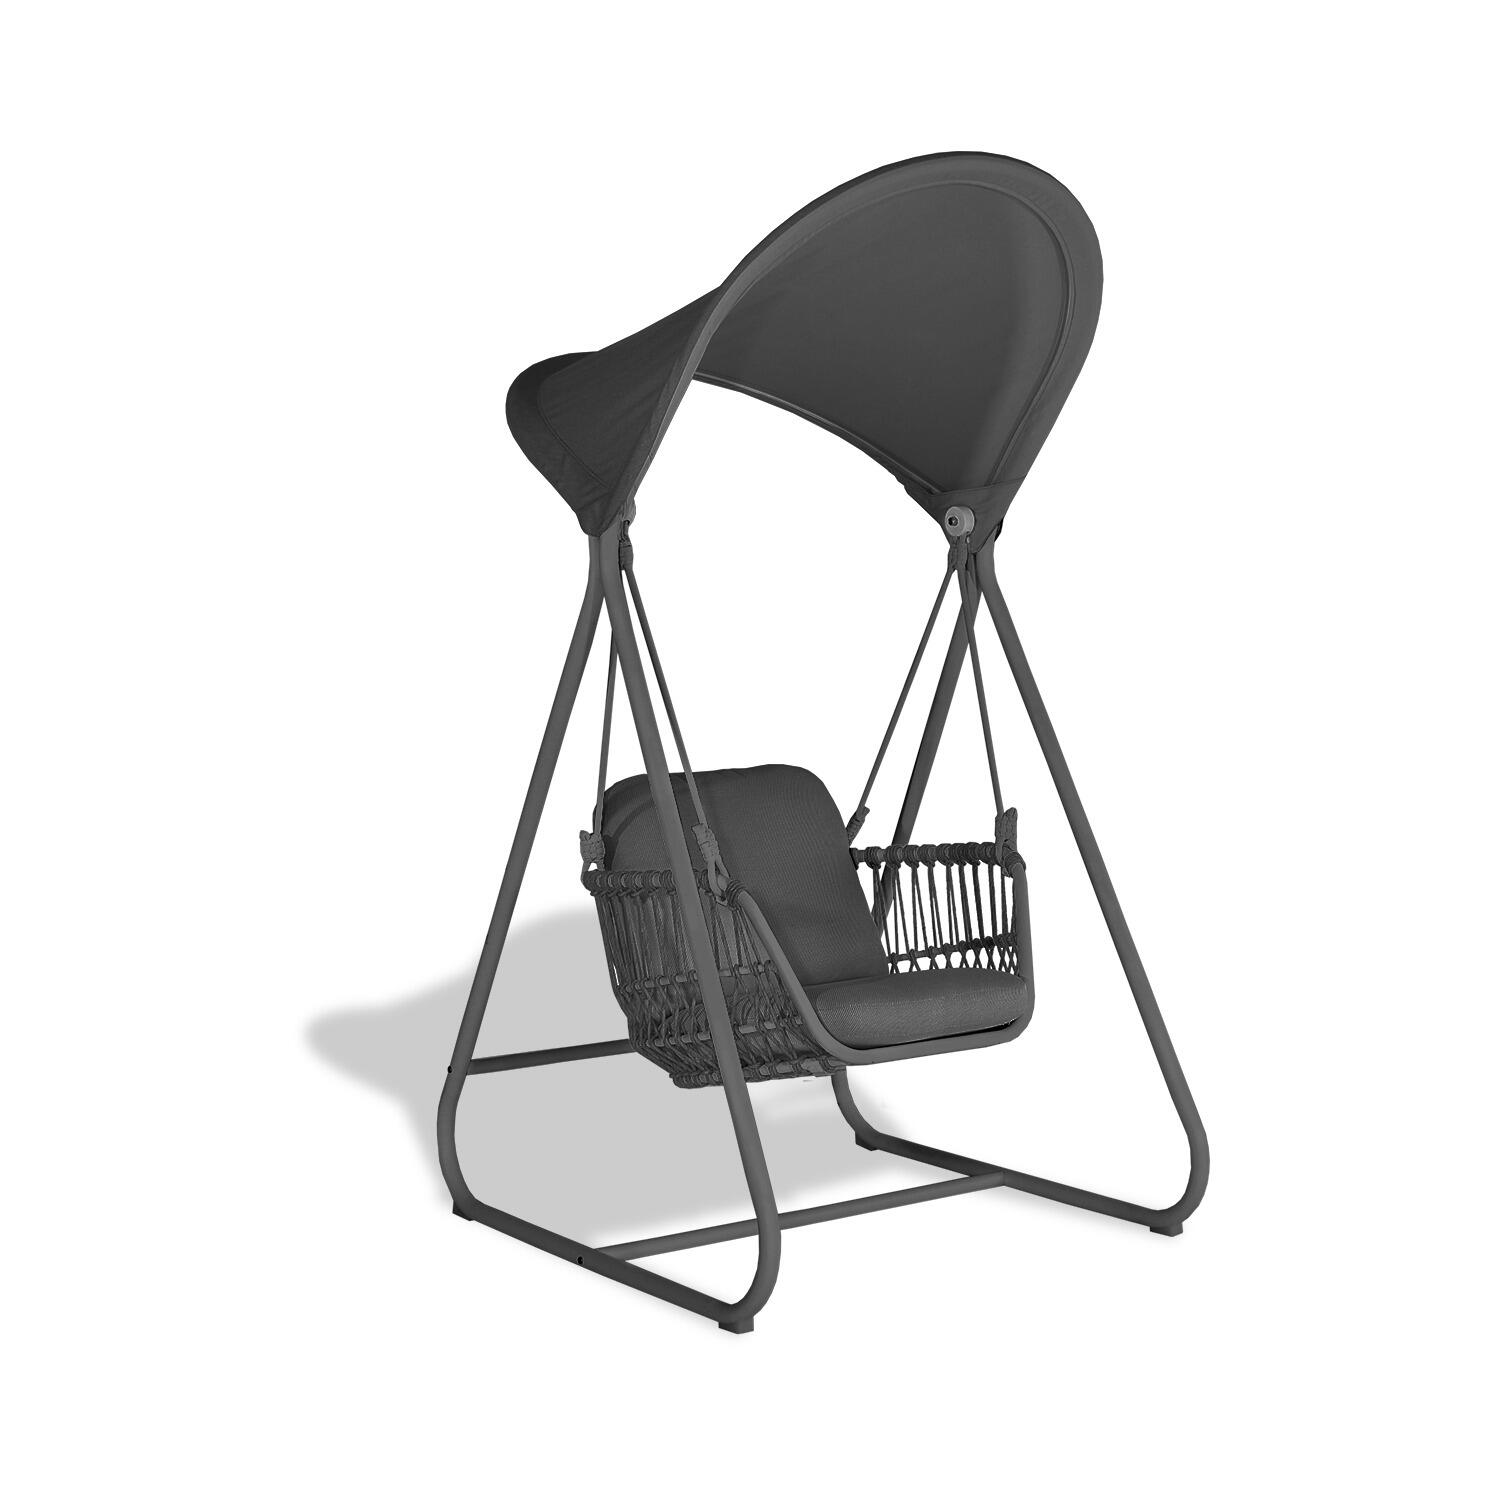 single swing seat modern garden hanging chair outdoor weatherproof aluminium and acrylic fabric cushions grey moon